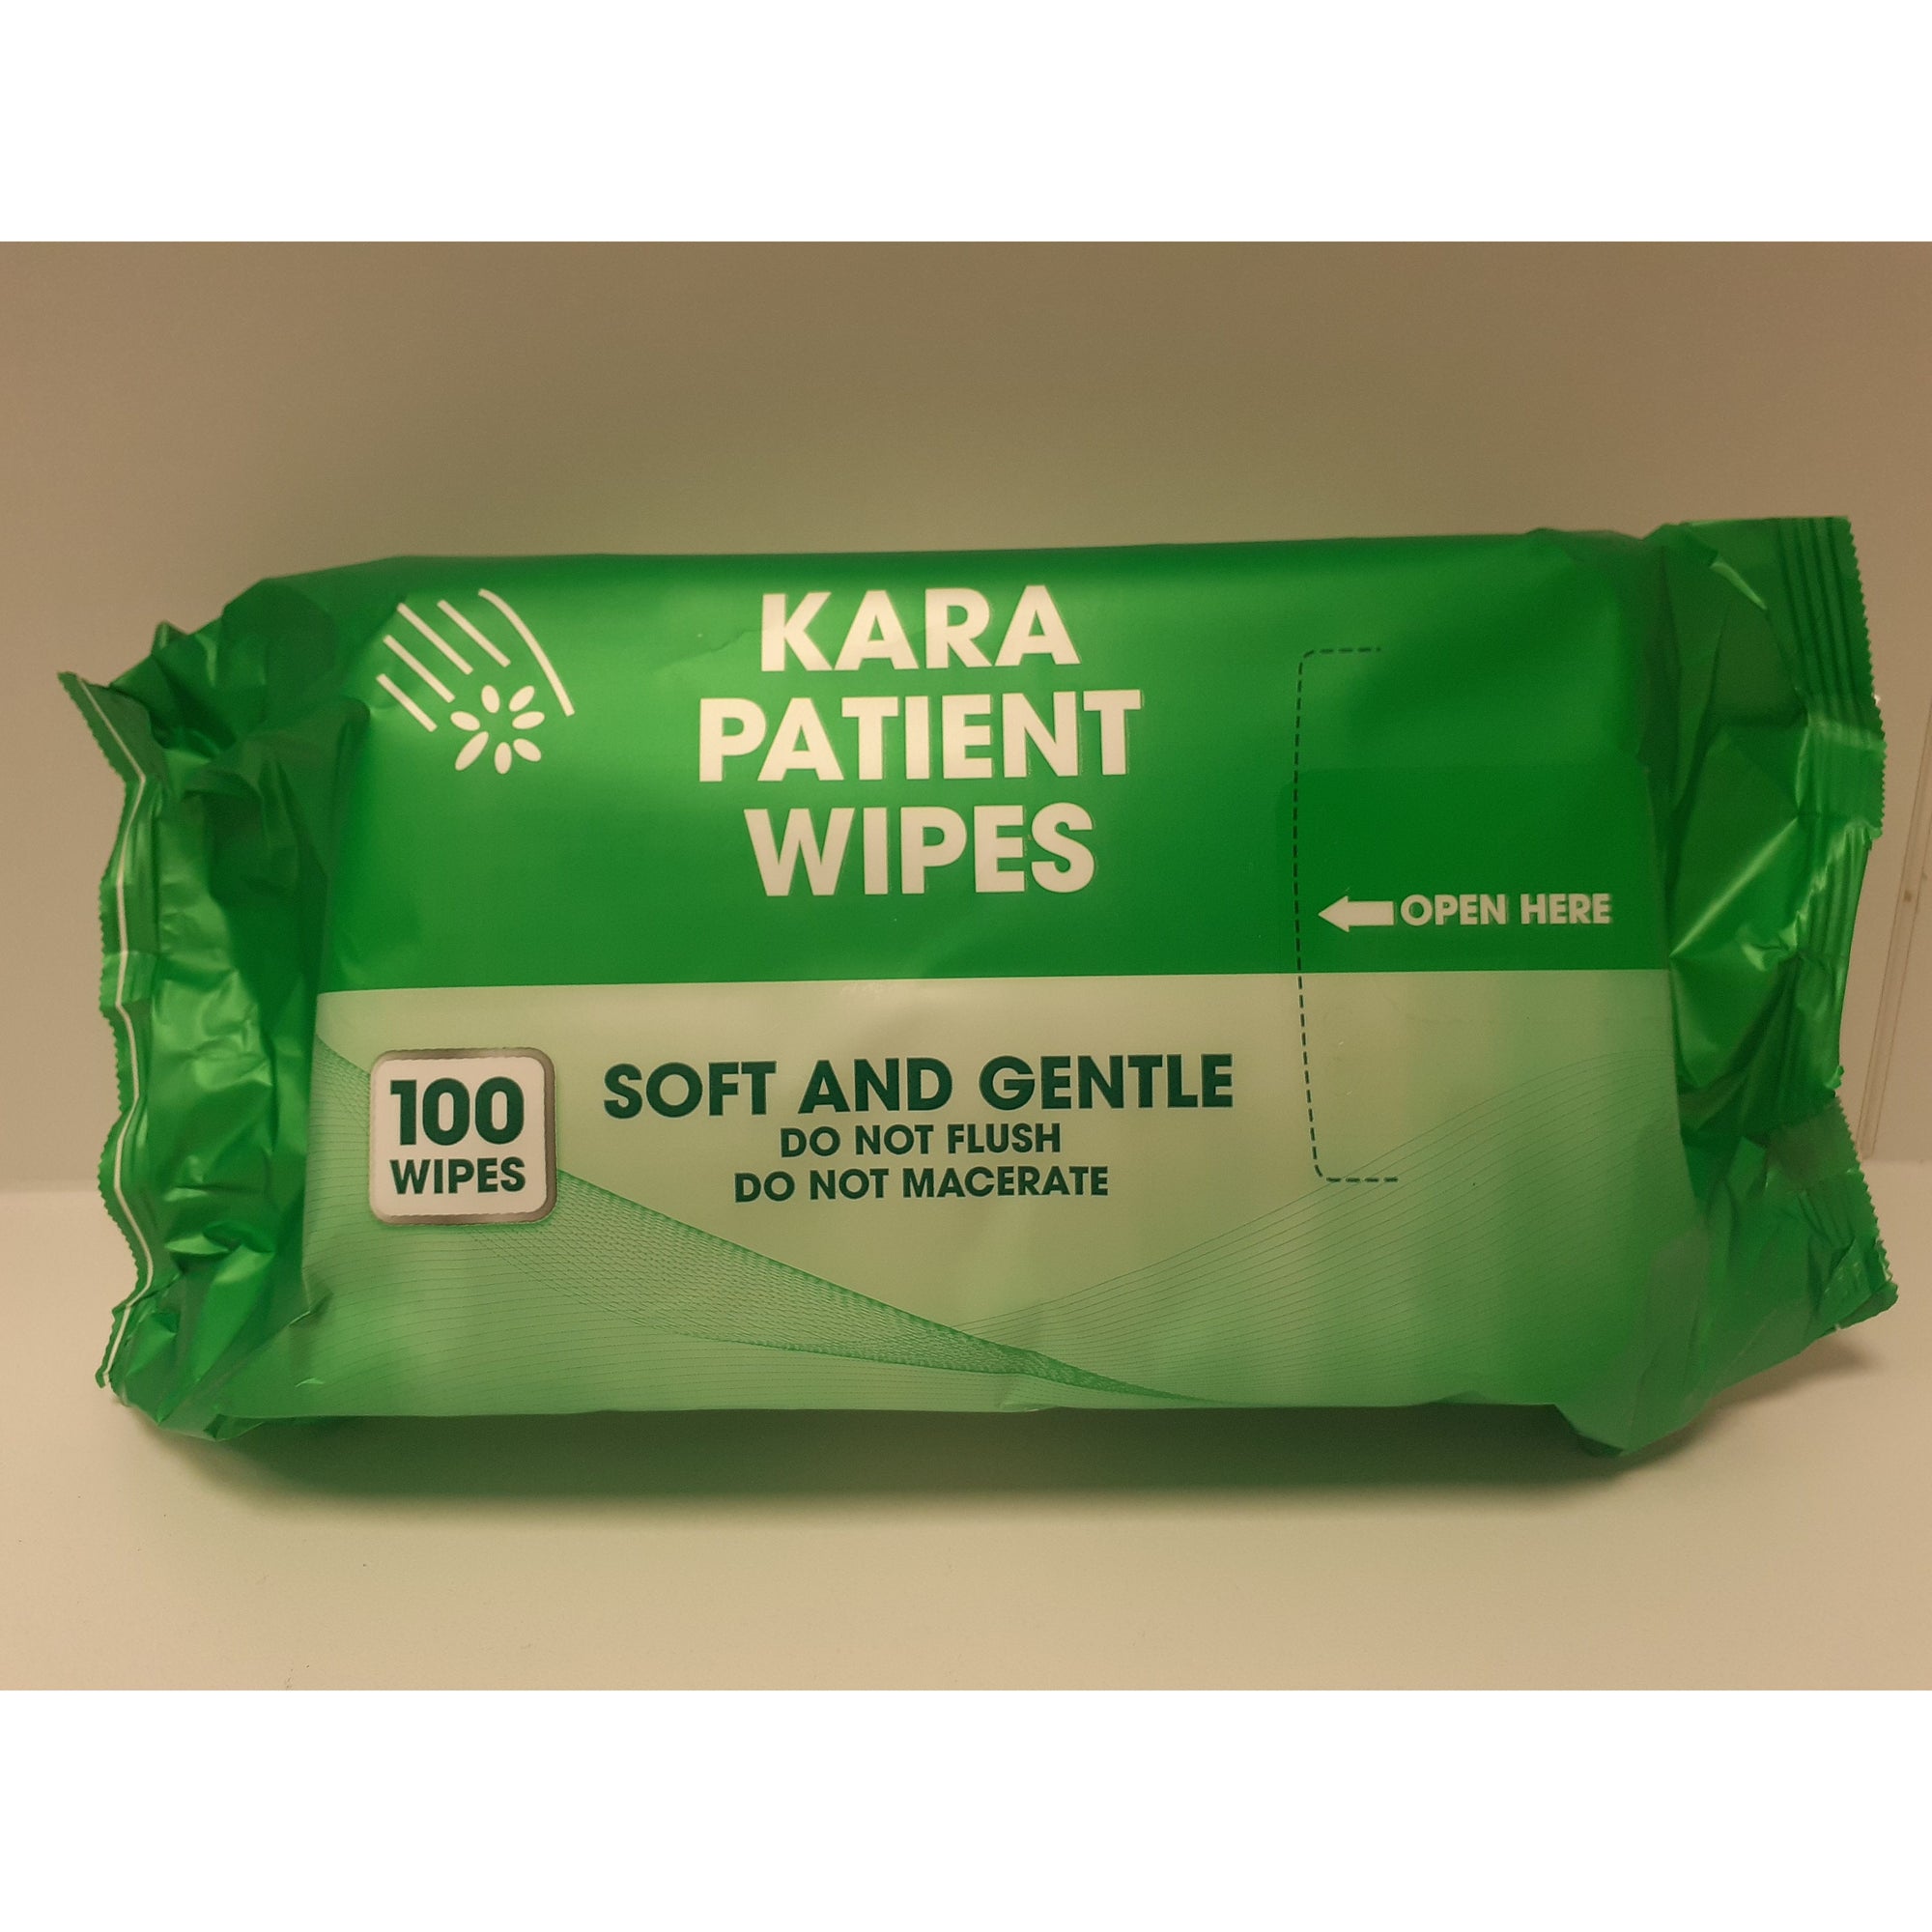 Kara Dry Patient Wipes 100